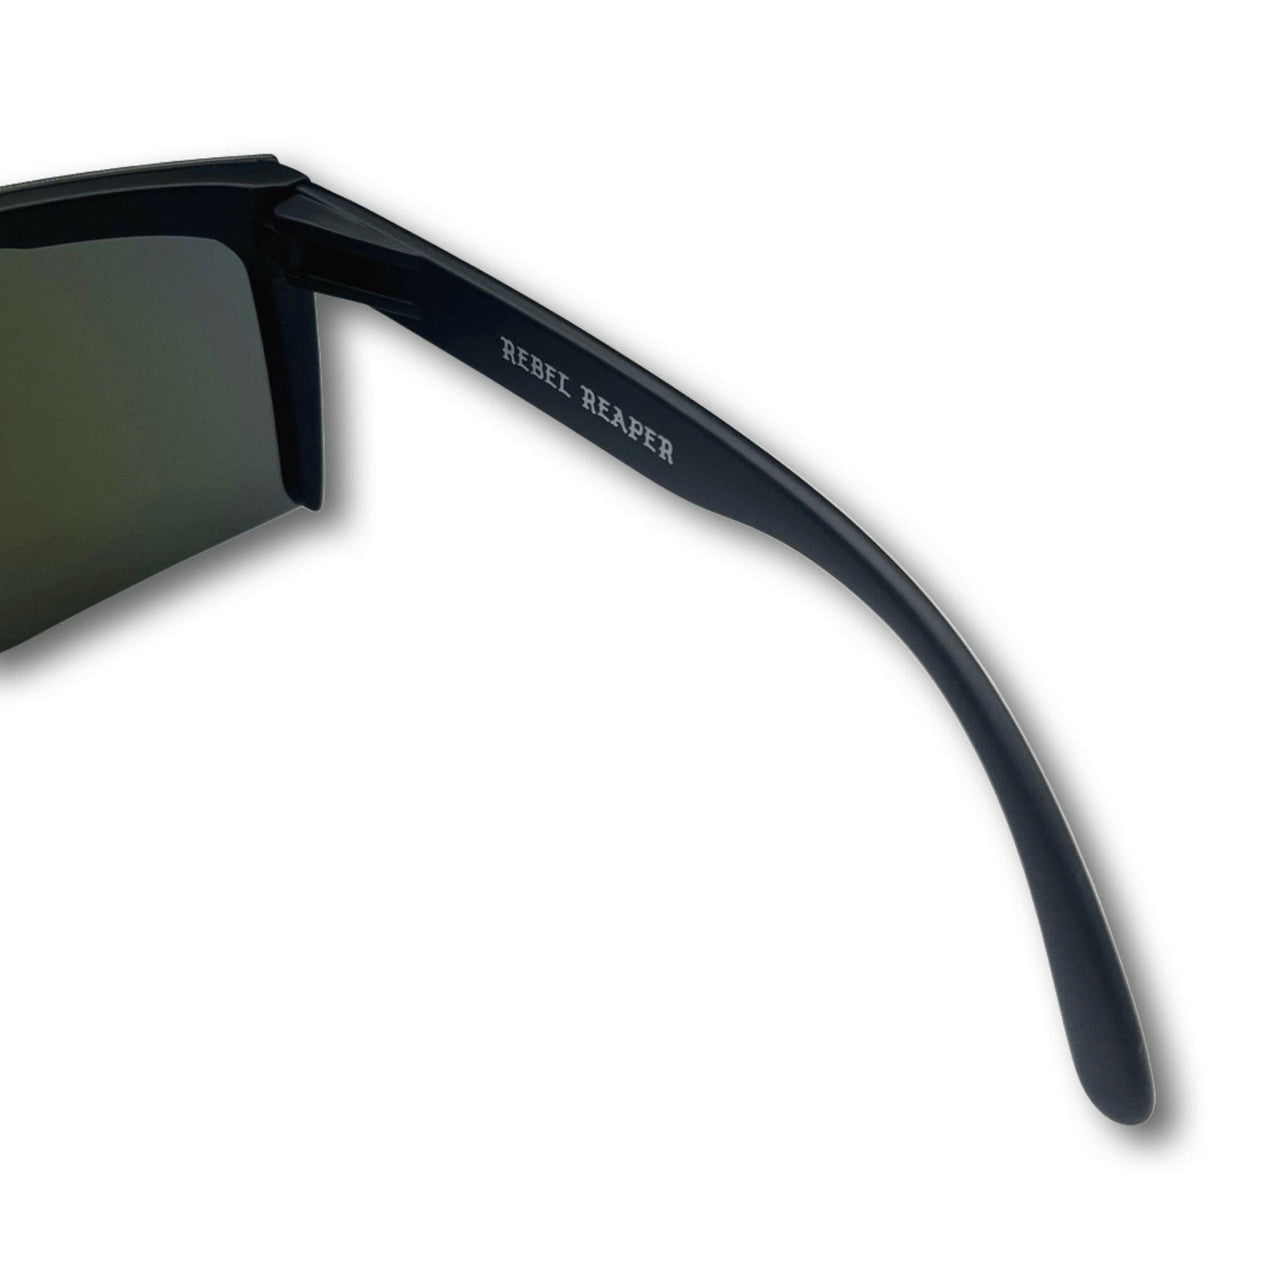 Hogans -Red Mirror Polarized Lens Sunglasses - Rebel Reaper Clothing Company Sunglasses